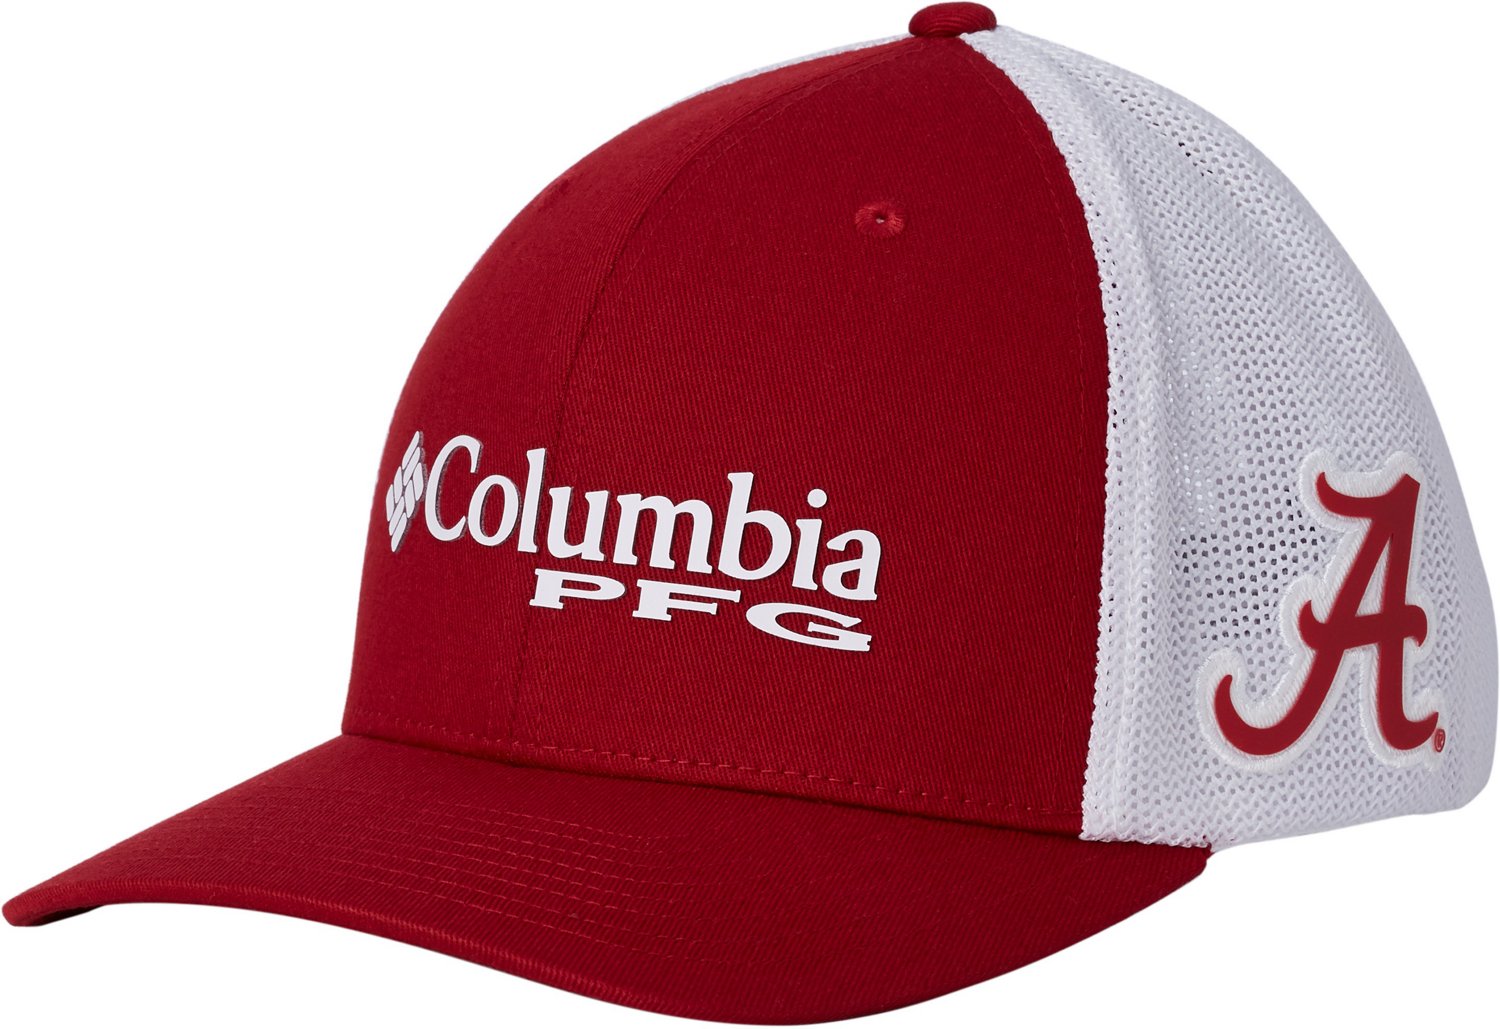 Columbia Sportswear Men's University of Alabama Collegiate PFG